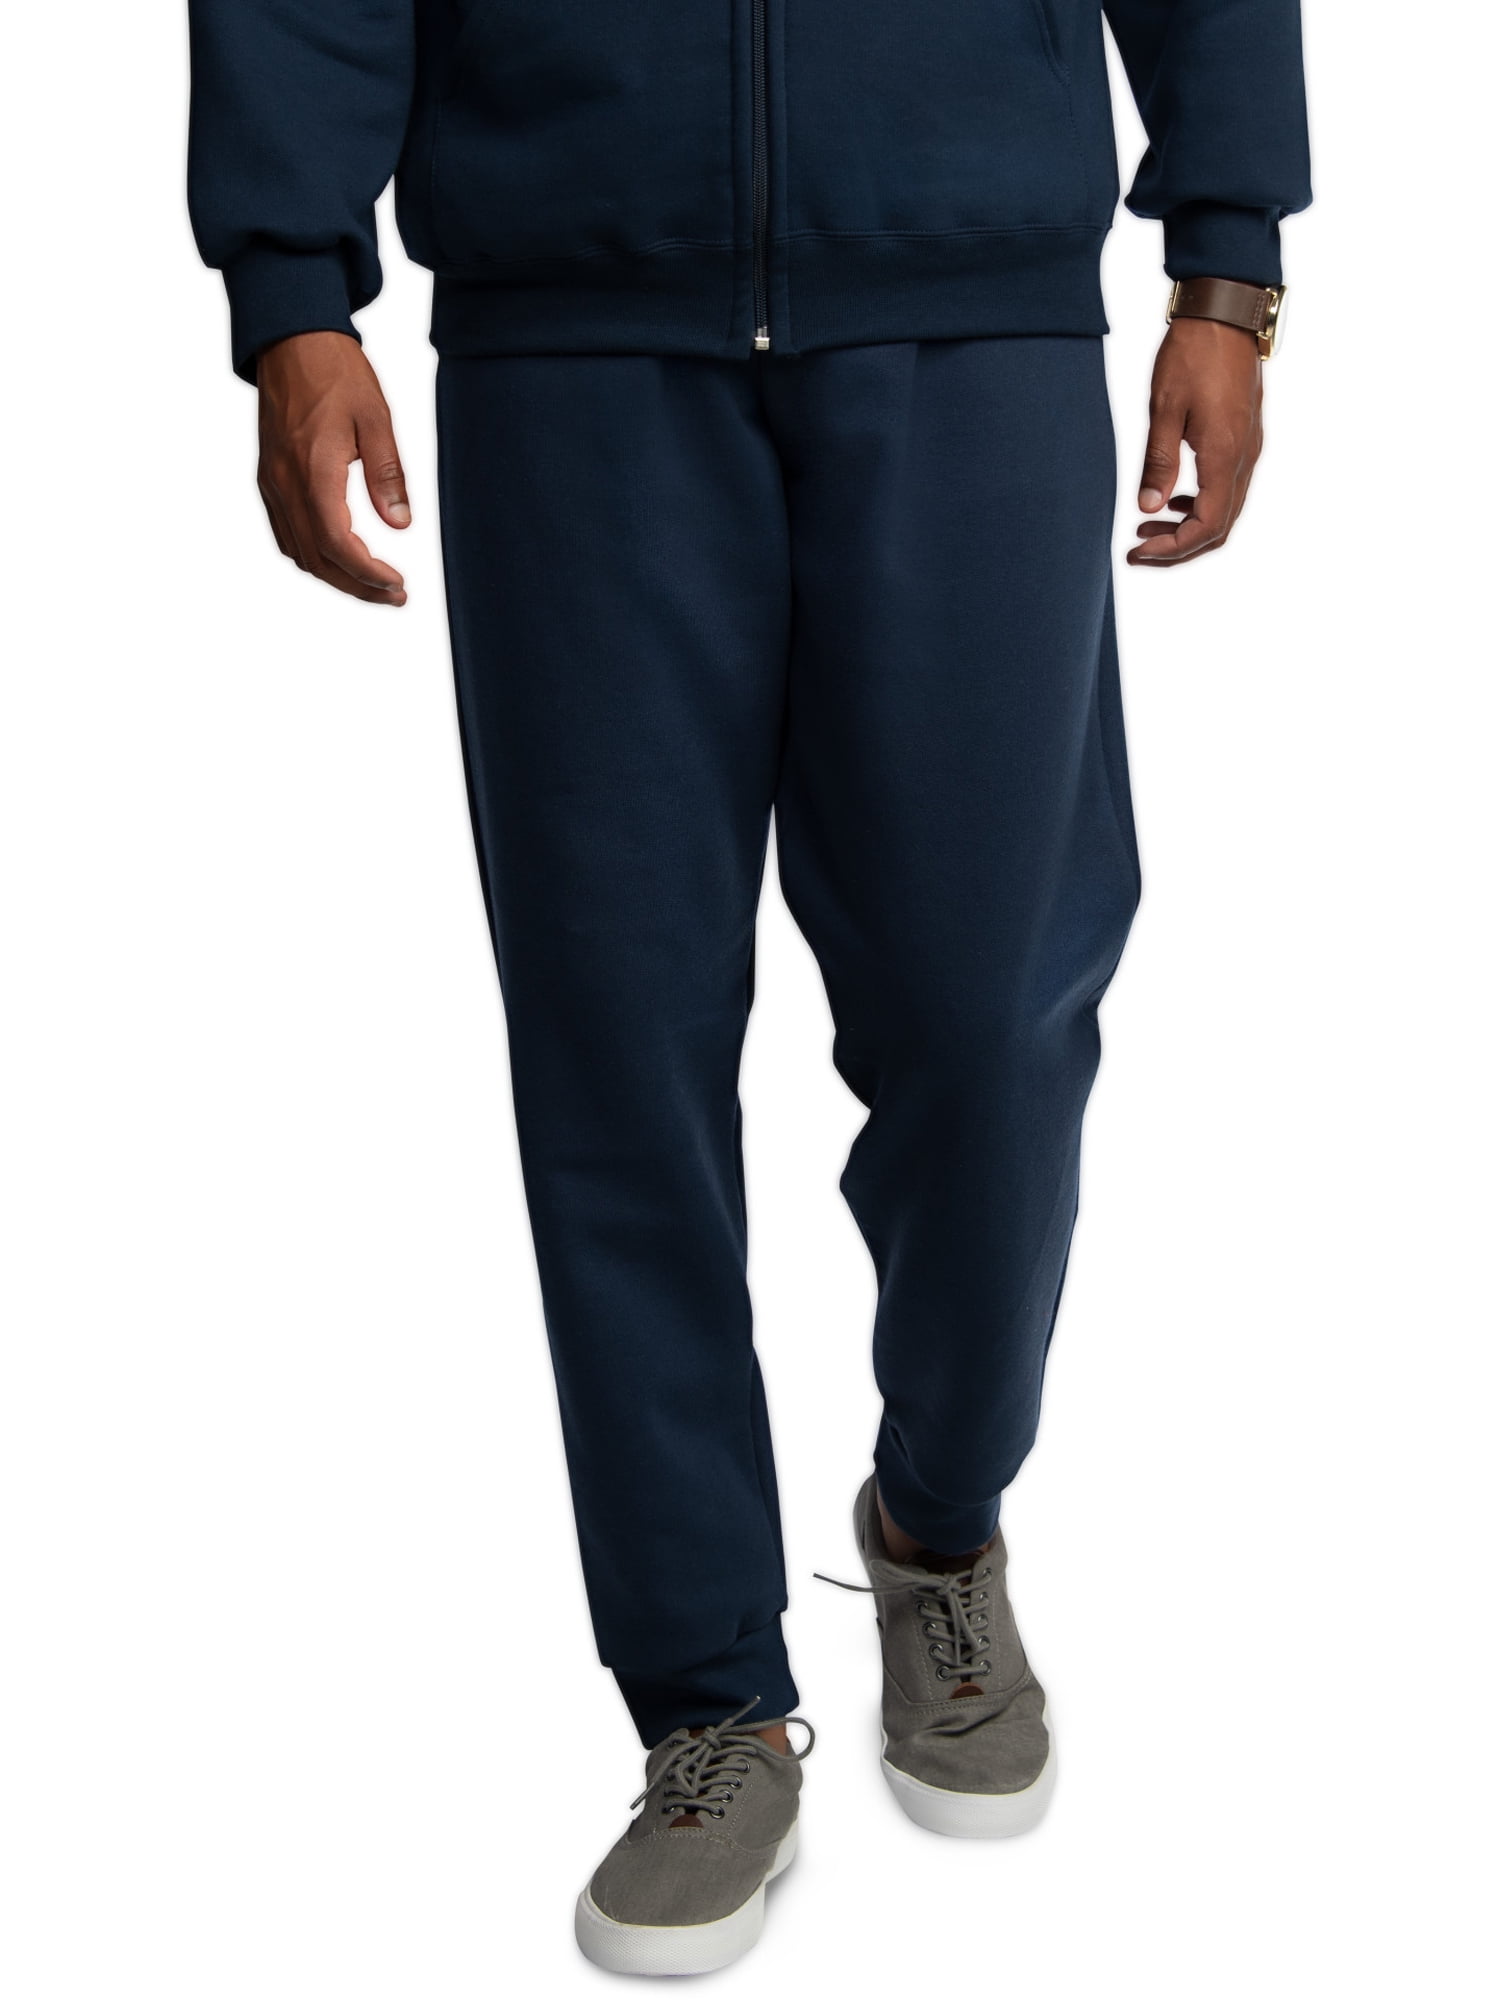 Solid Black Men's Eversoft Fleece Sweatpants & Joggers (Regular & Big Man),  Lounge Wear at Rs 999/piece in Tiruppur